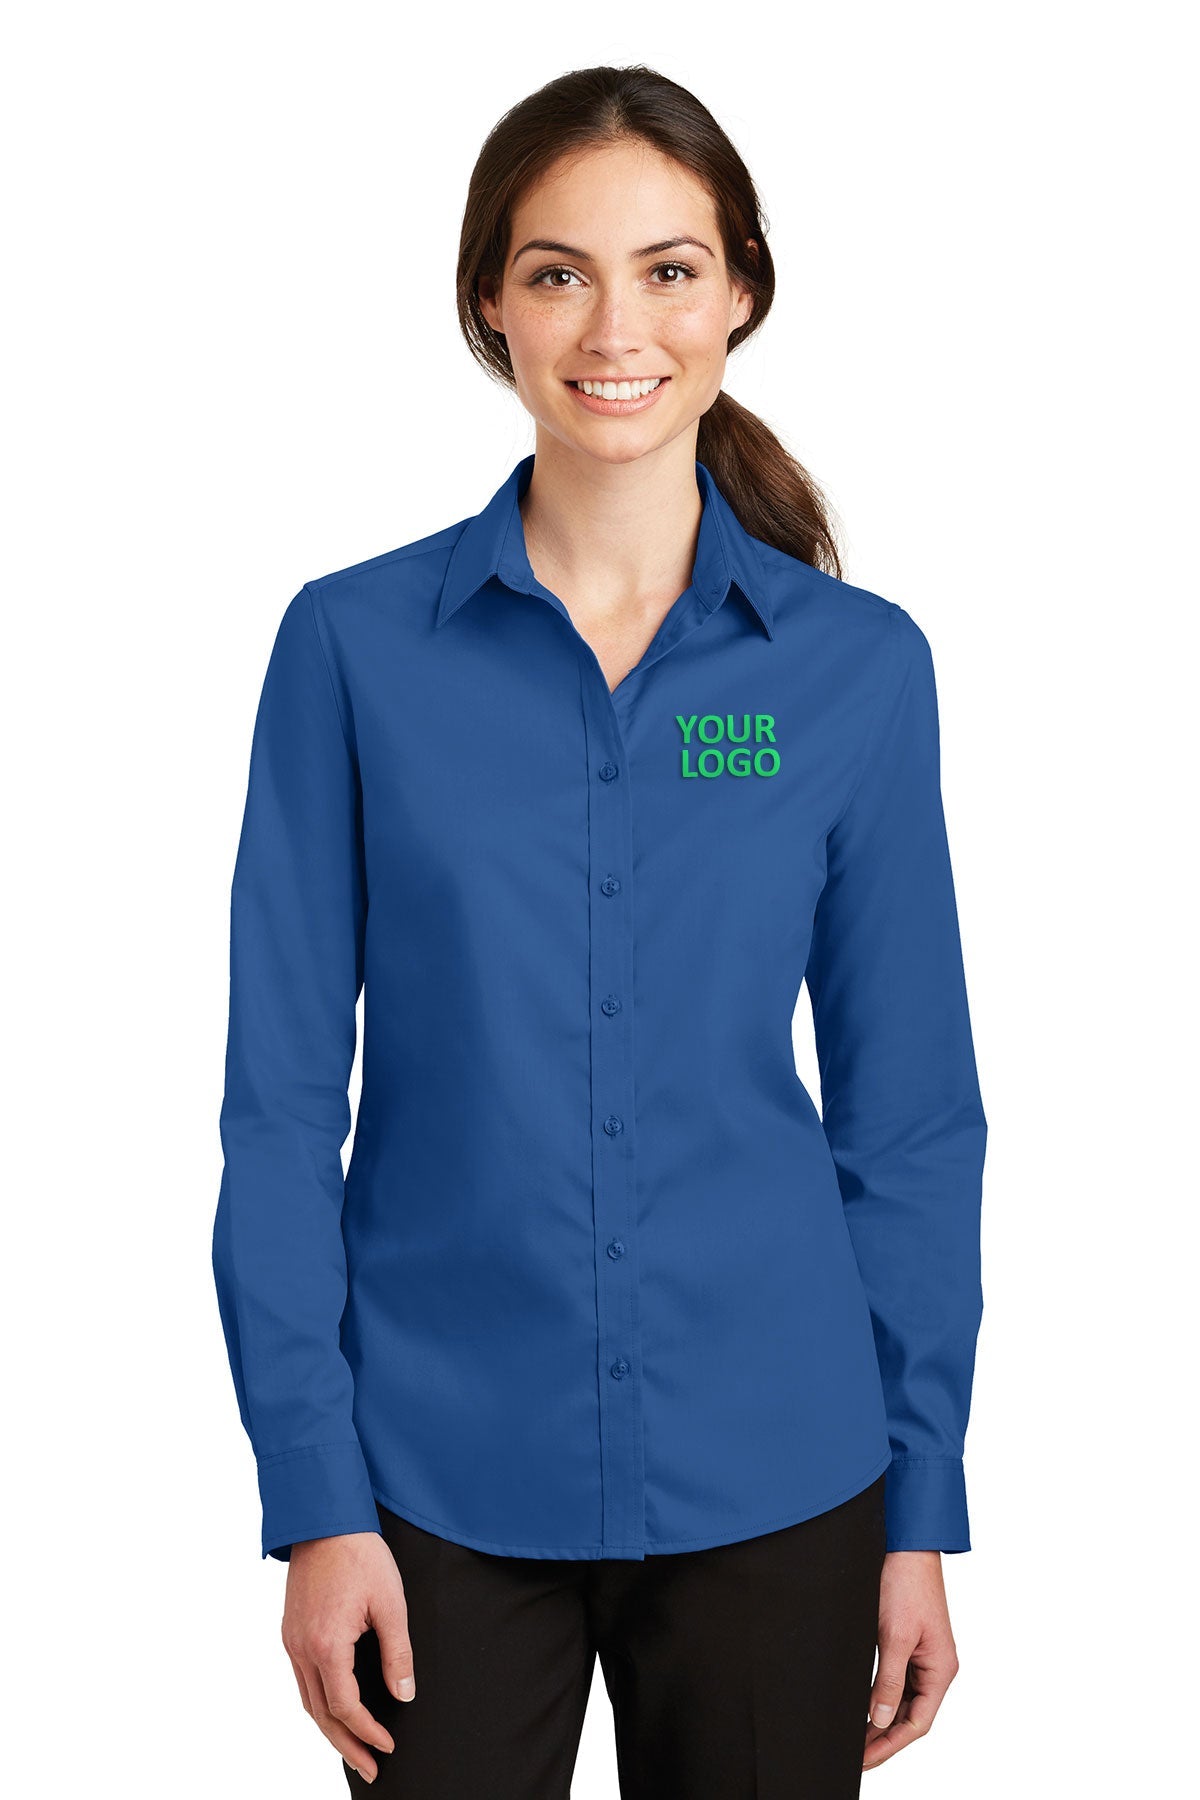 Port Authority True Blue L663 custom work shirts